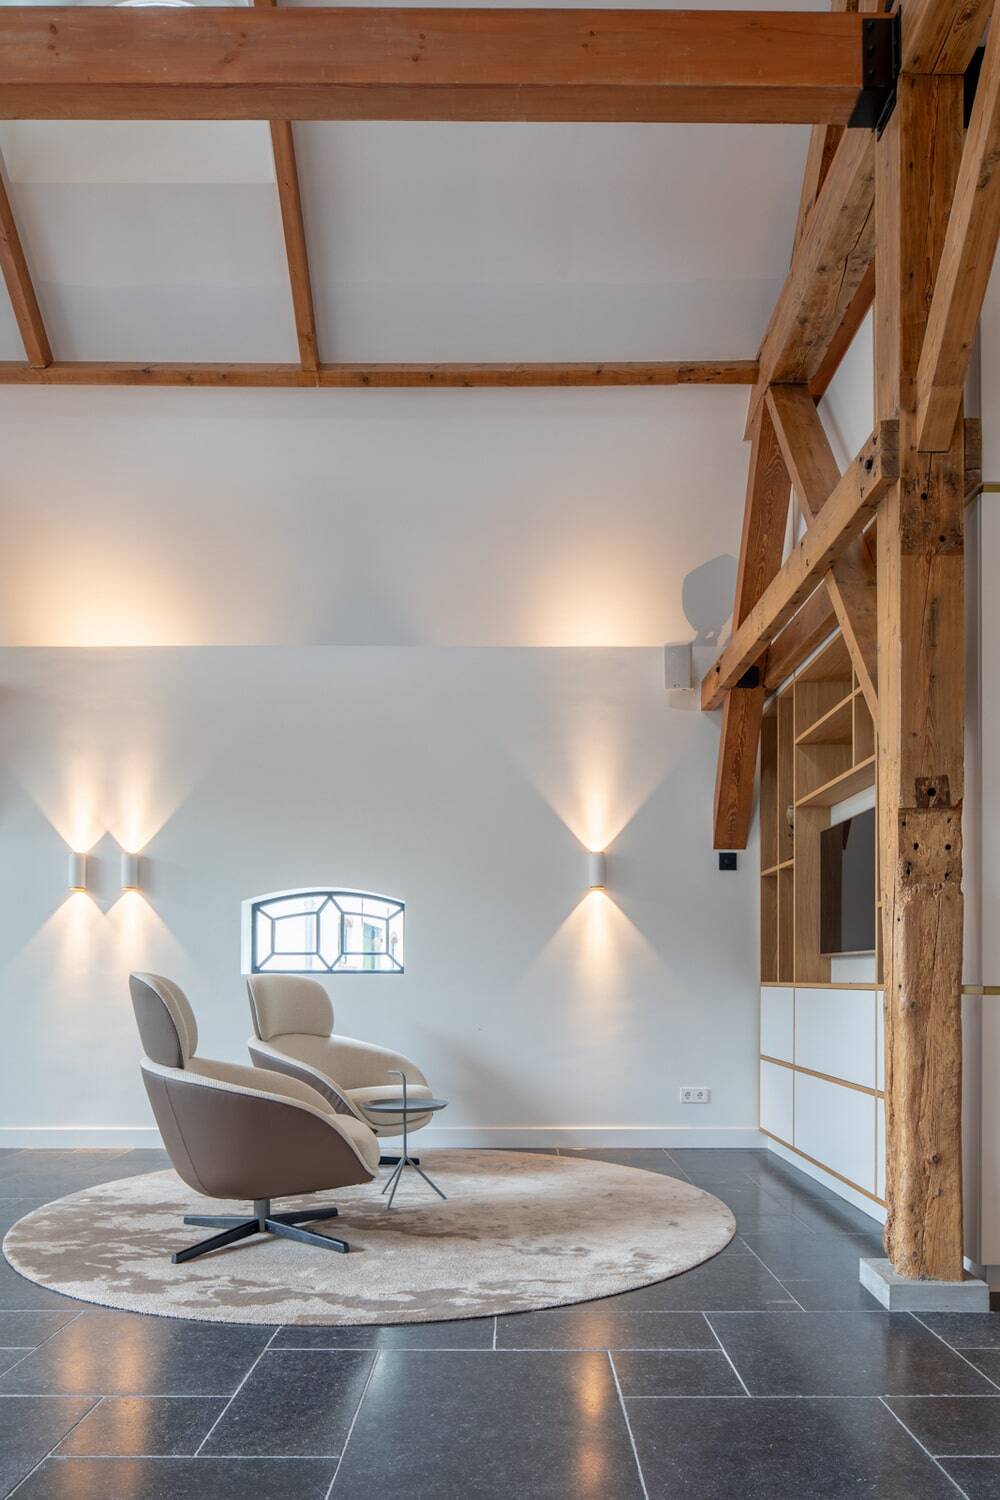 A Former Sheepfold Transformed into a Comfortable House